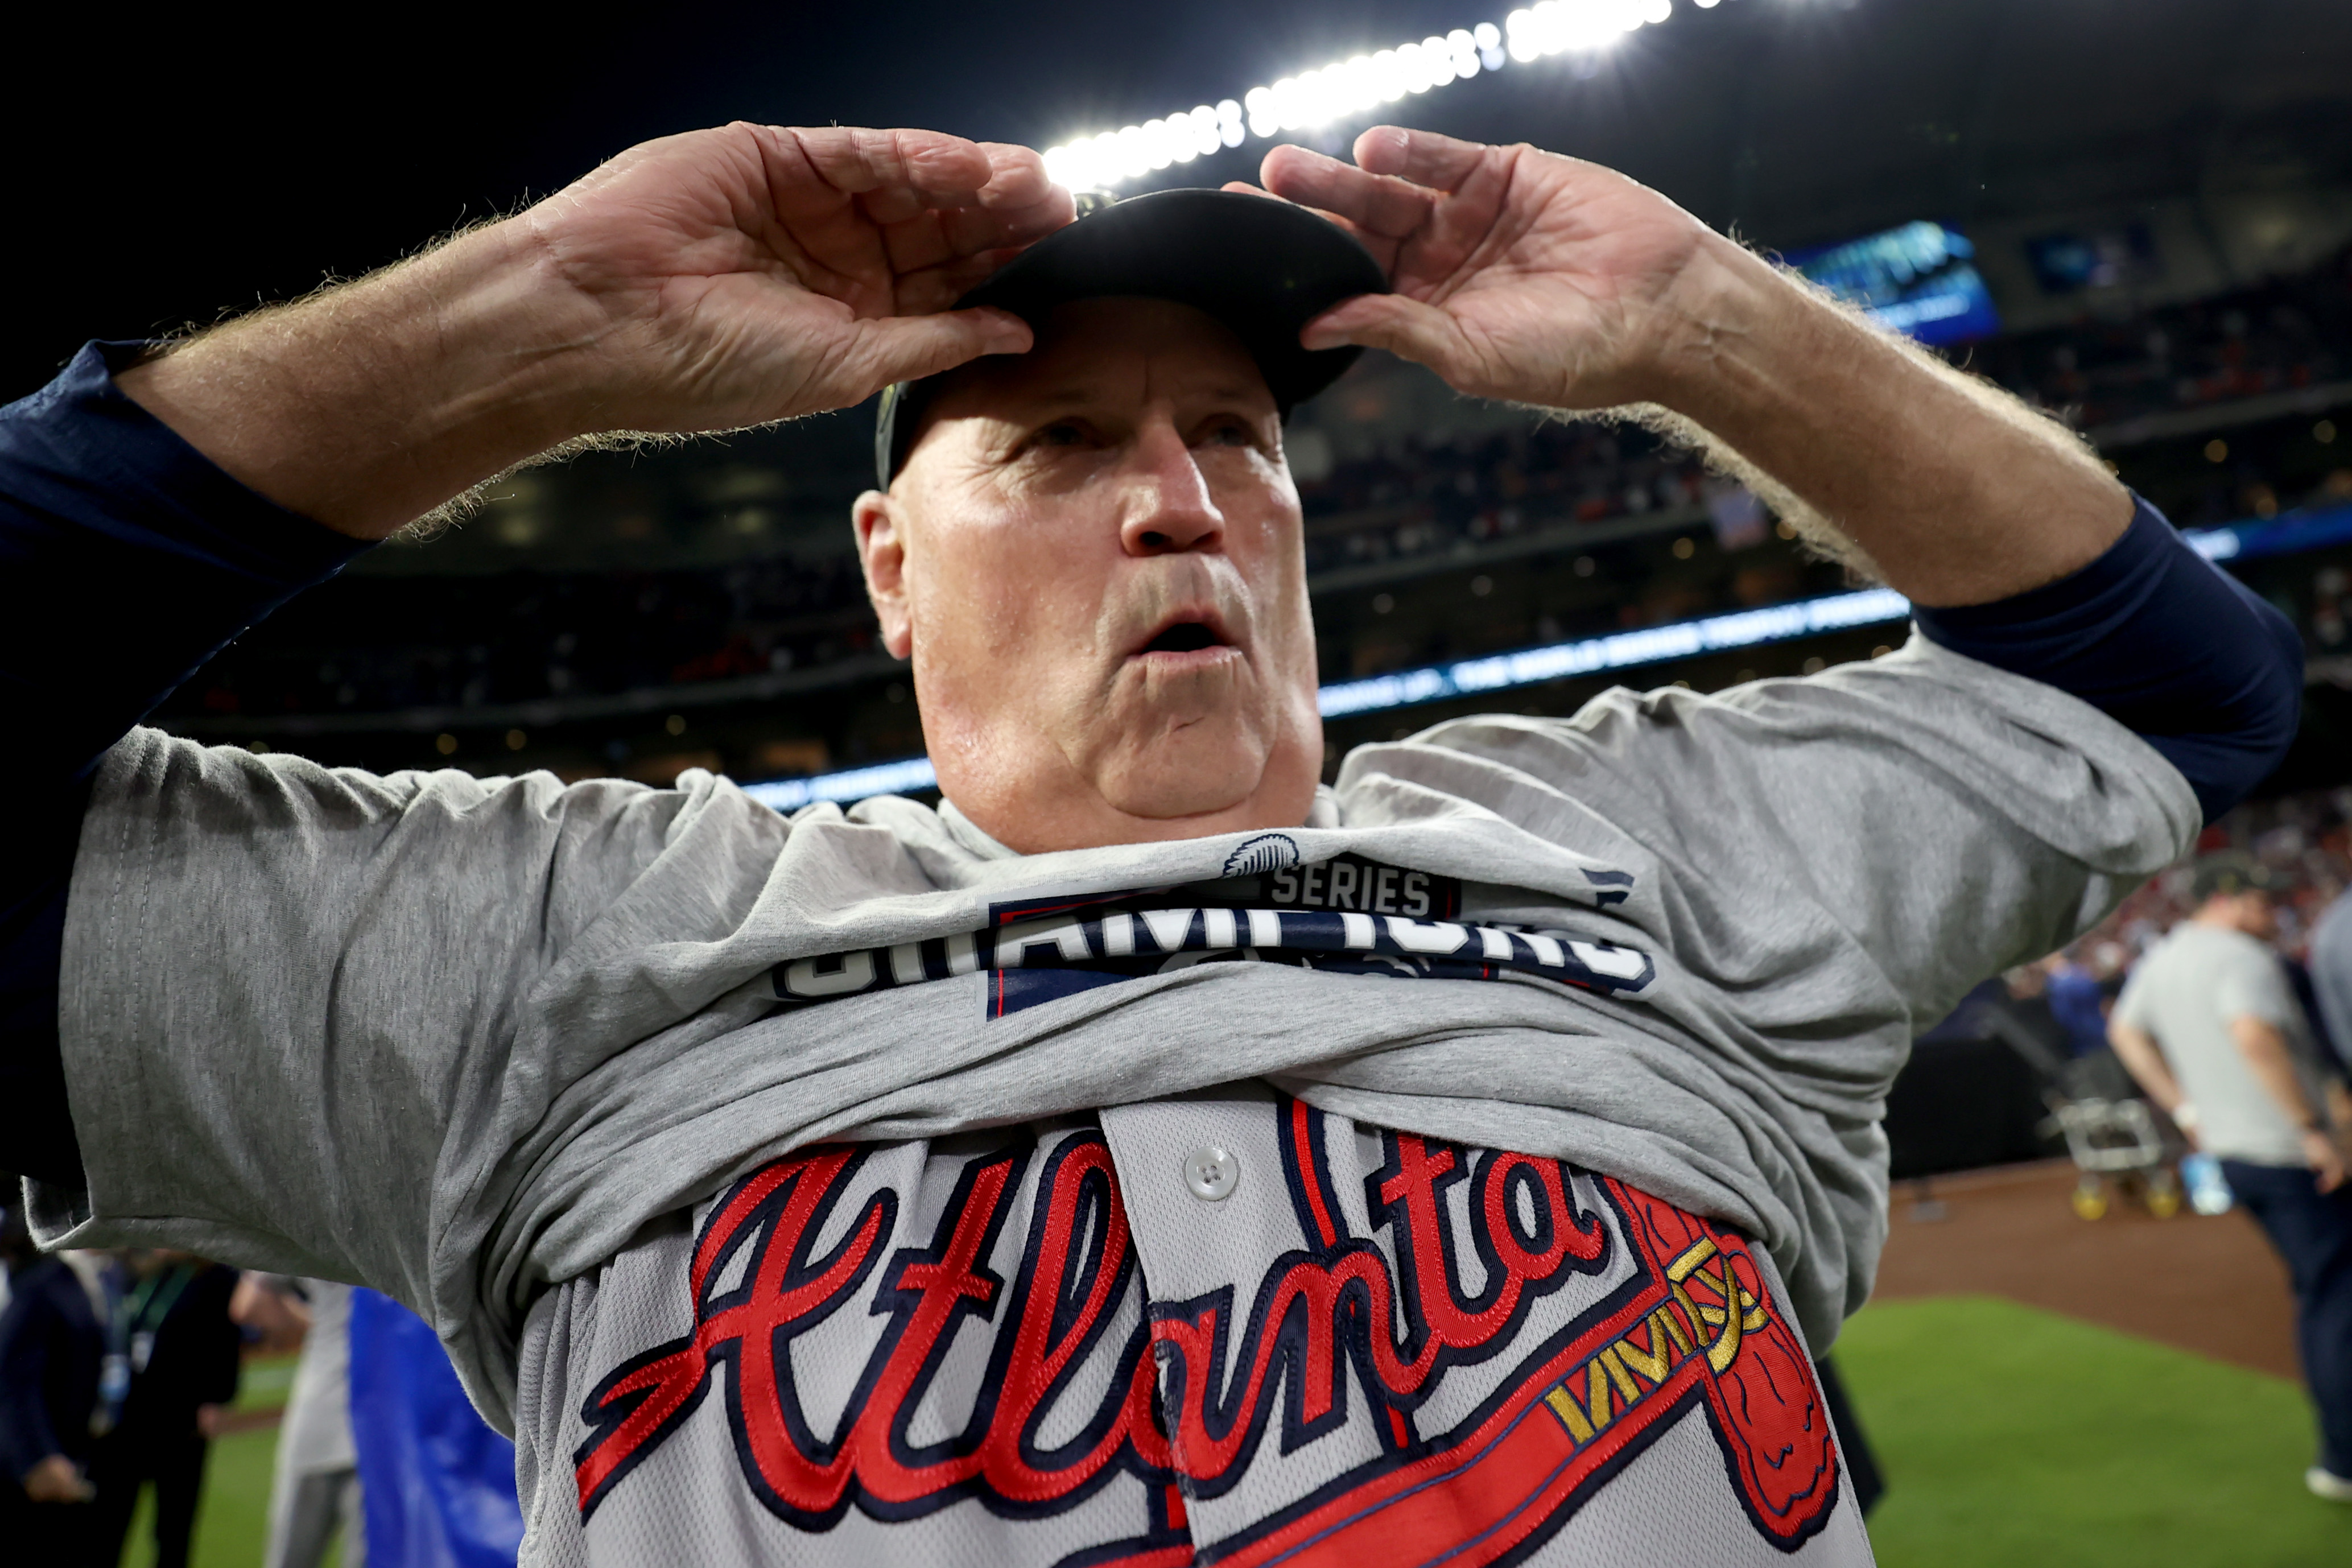 Brave new world: Atlanta beats Dodgers 4-2, heads to World Series